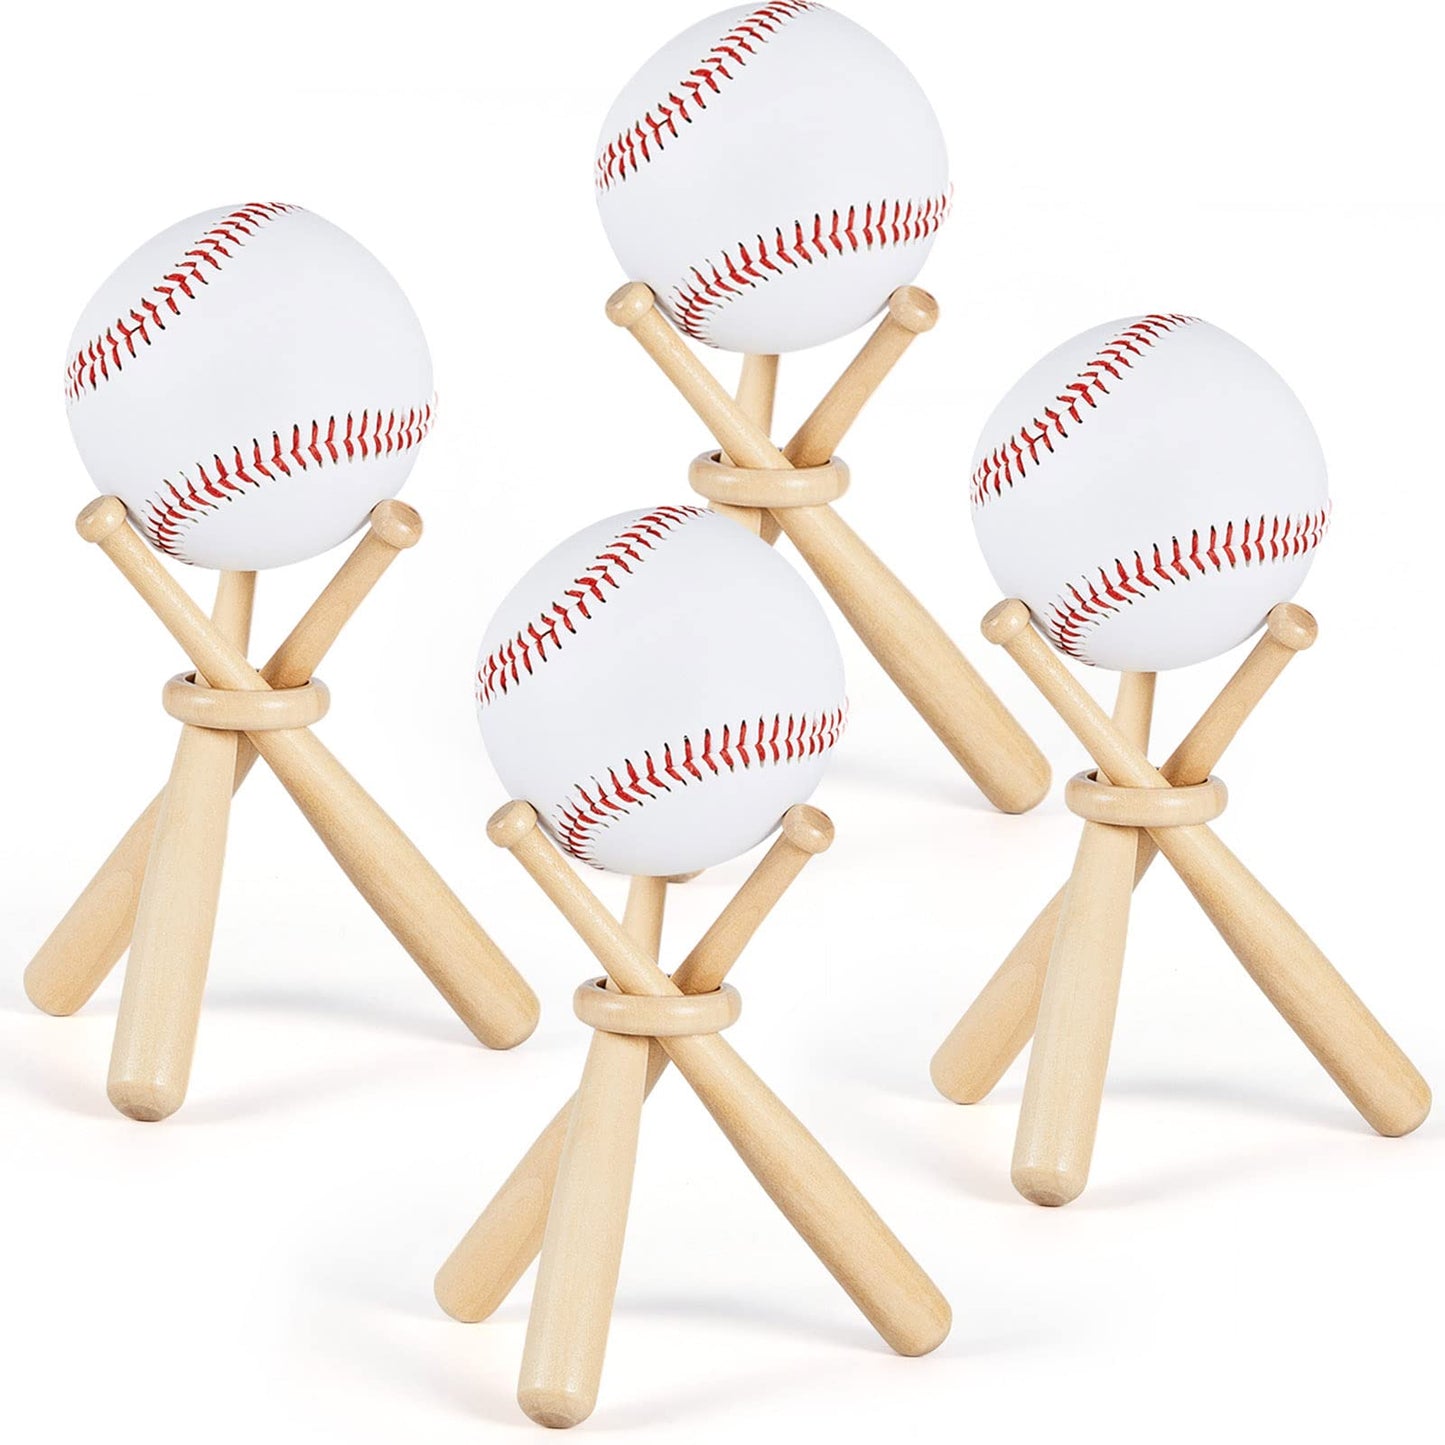 Maitys Baseball Stand Baseball Holders for Display Balls Wooden Baseball Bat Display Stand Holder Display Baseball Centerpieces for Tables for Kids and Sports Lover